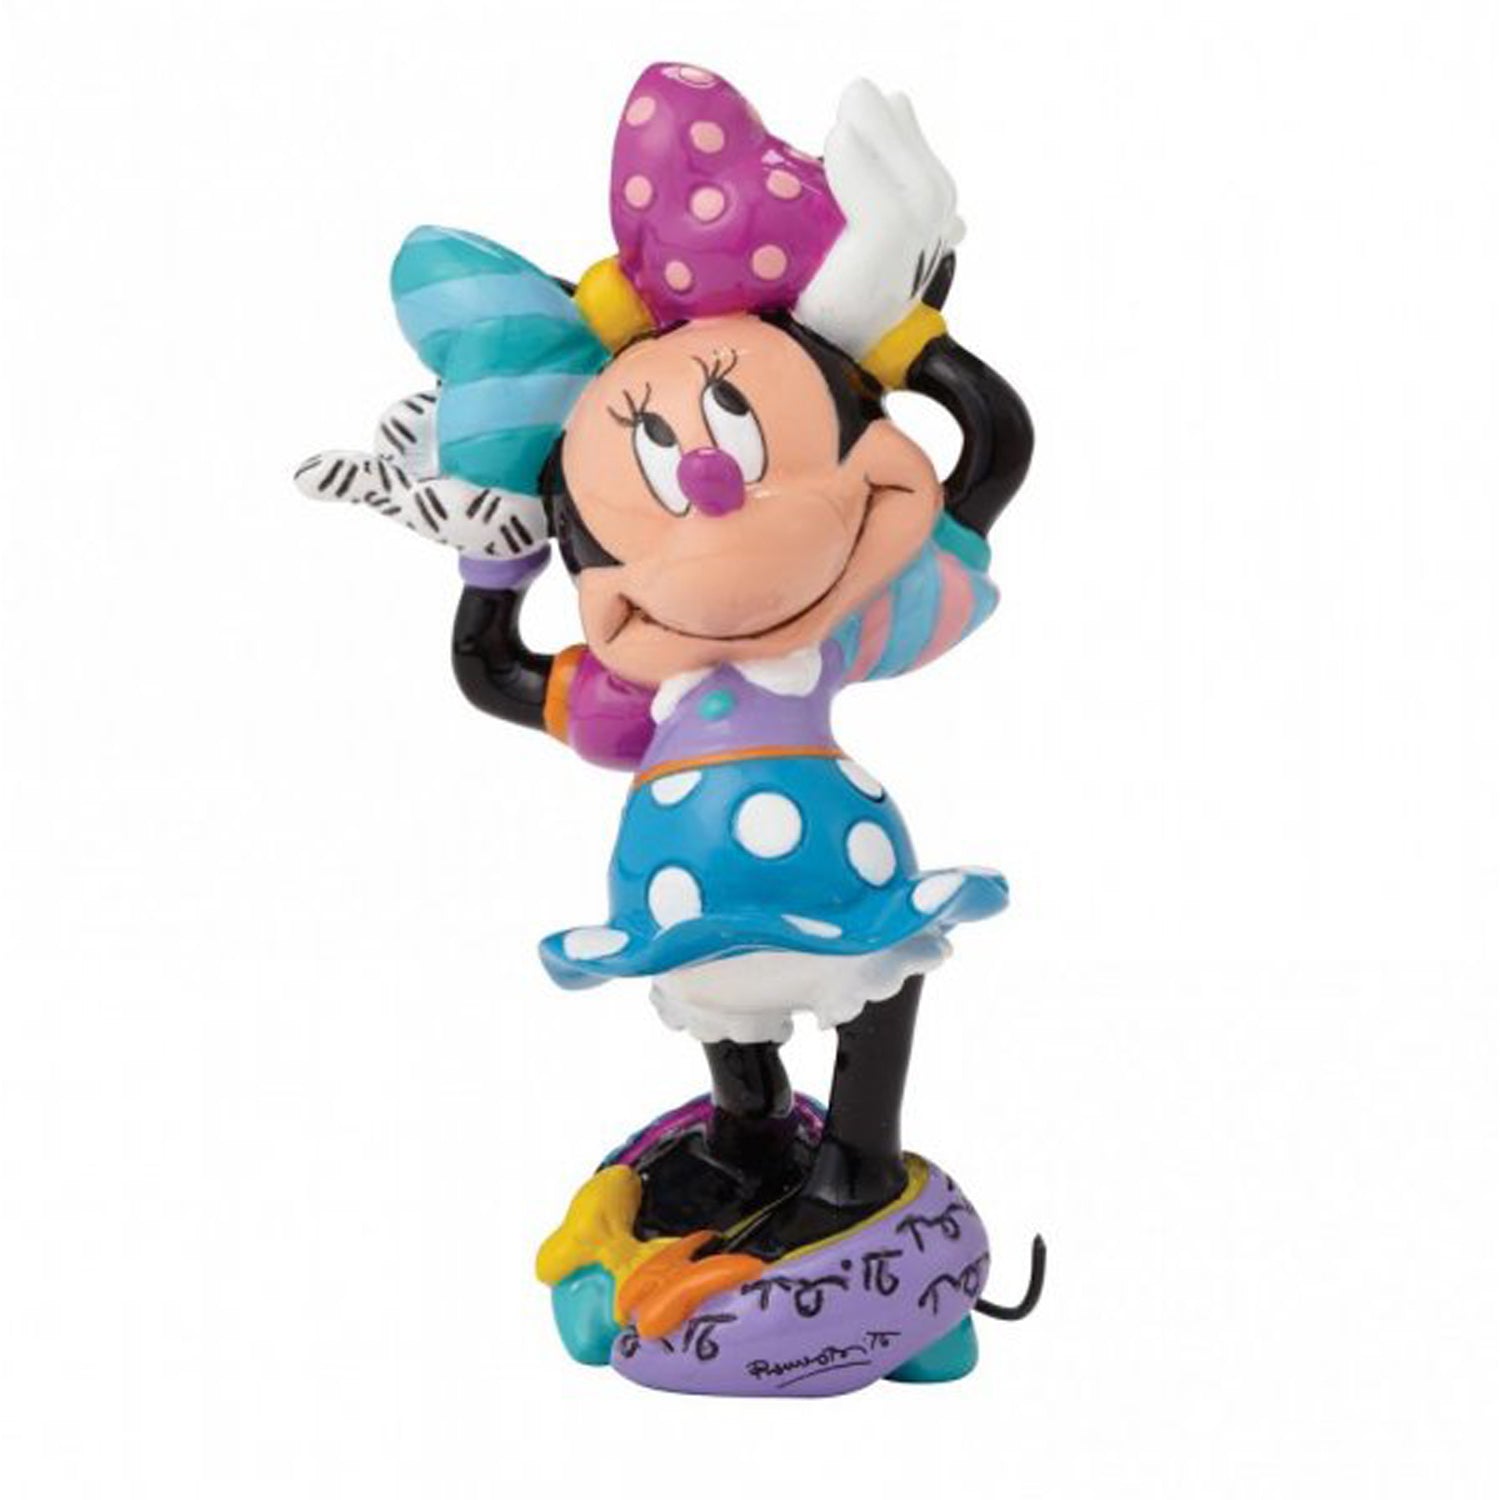 Minnie-Mouse-Mini-Britto-Disney-Figur-berlindeluxe-maus-fliege